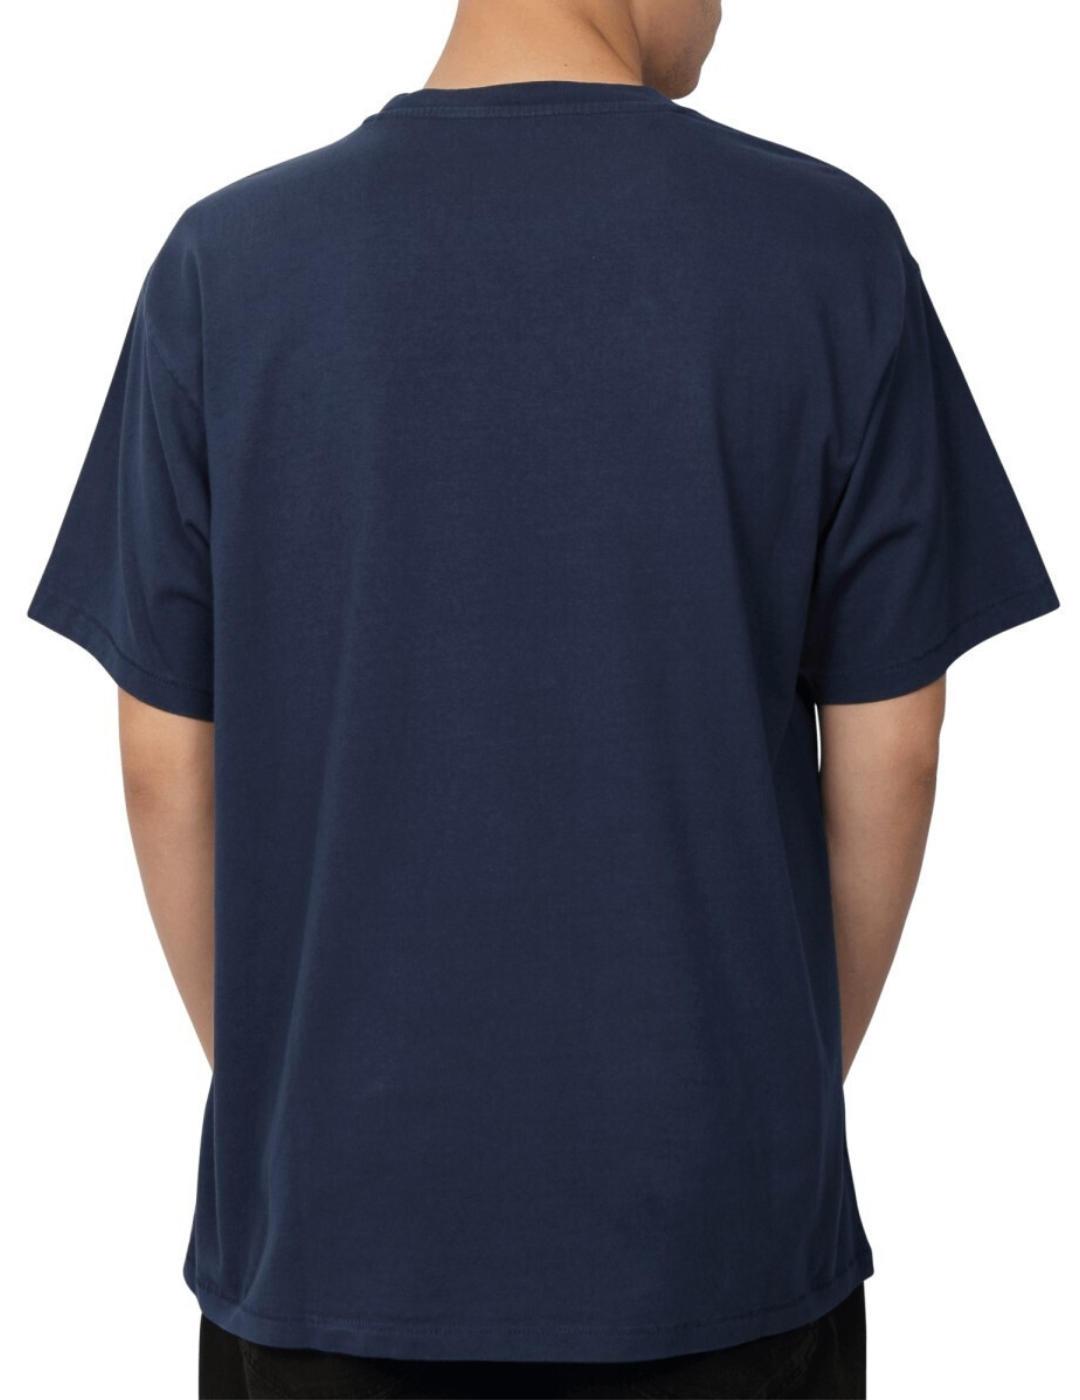 Camiseta Levi's vintage azul marino manga corta para hombre